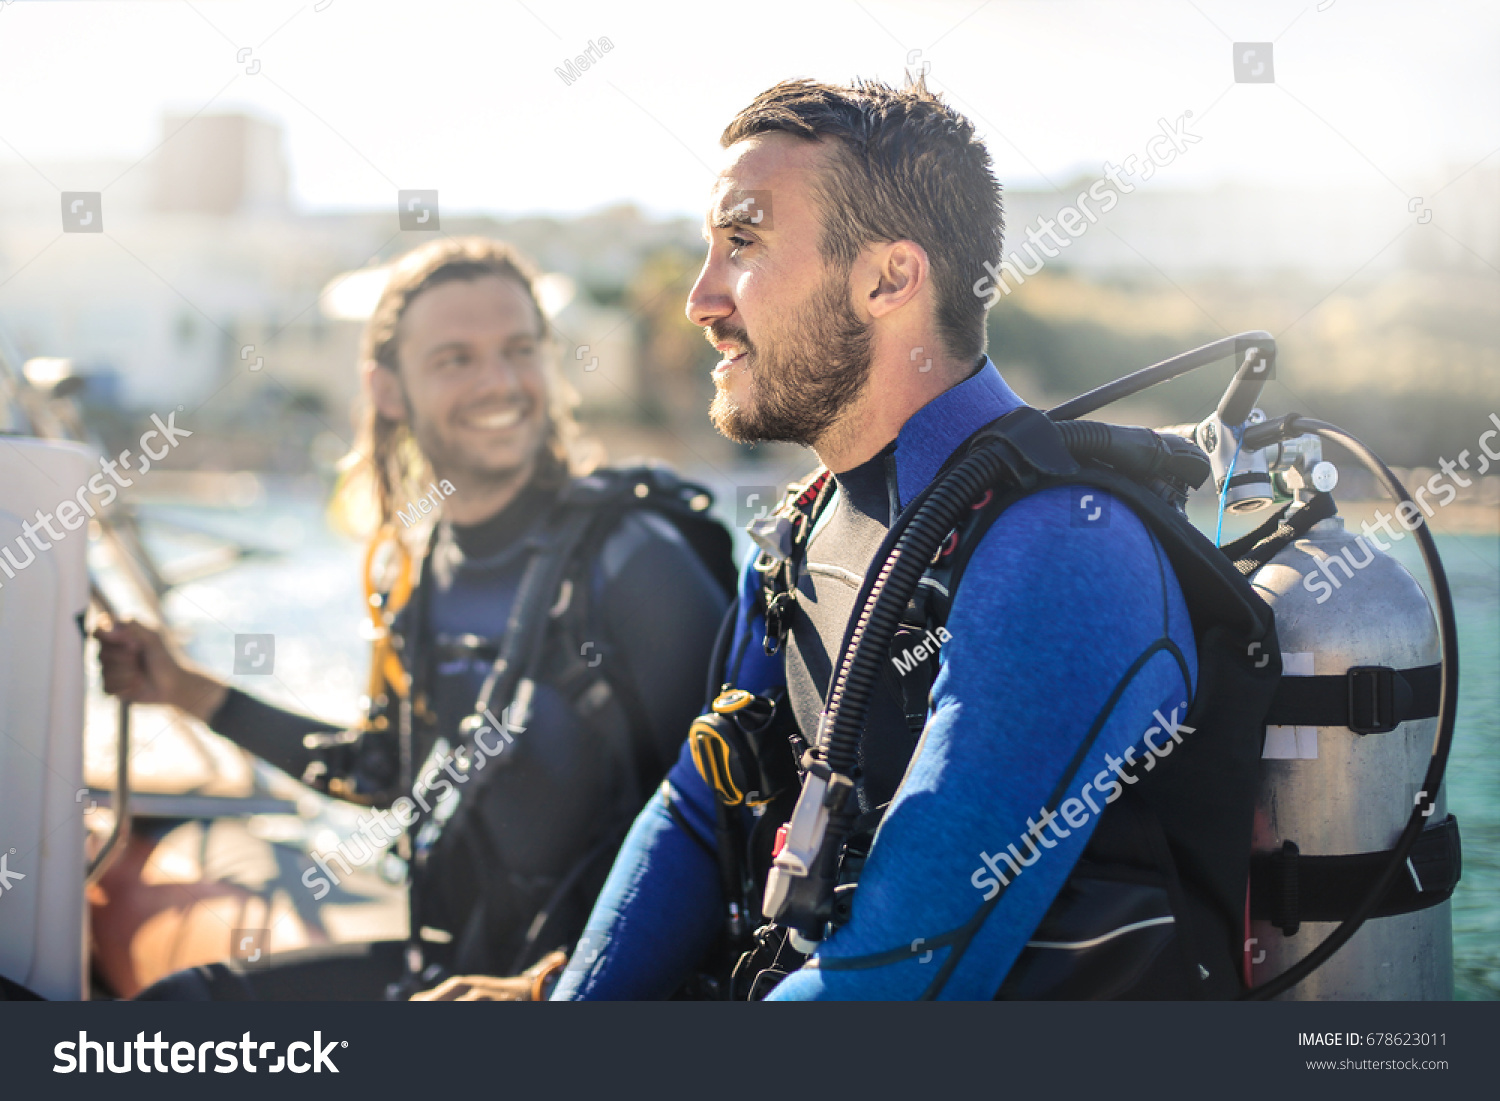 Scuba divers having fun #678623011